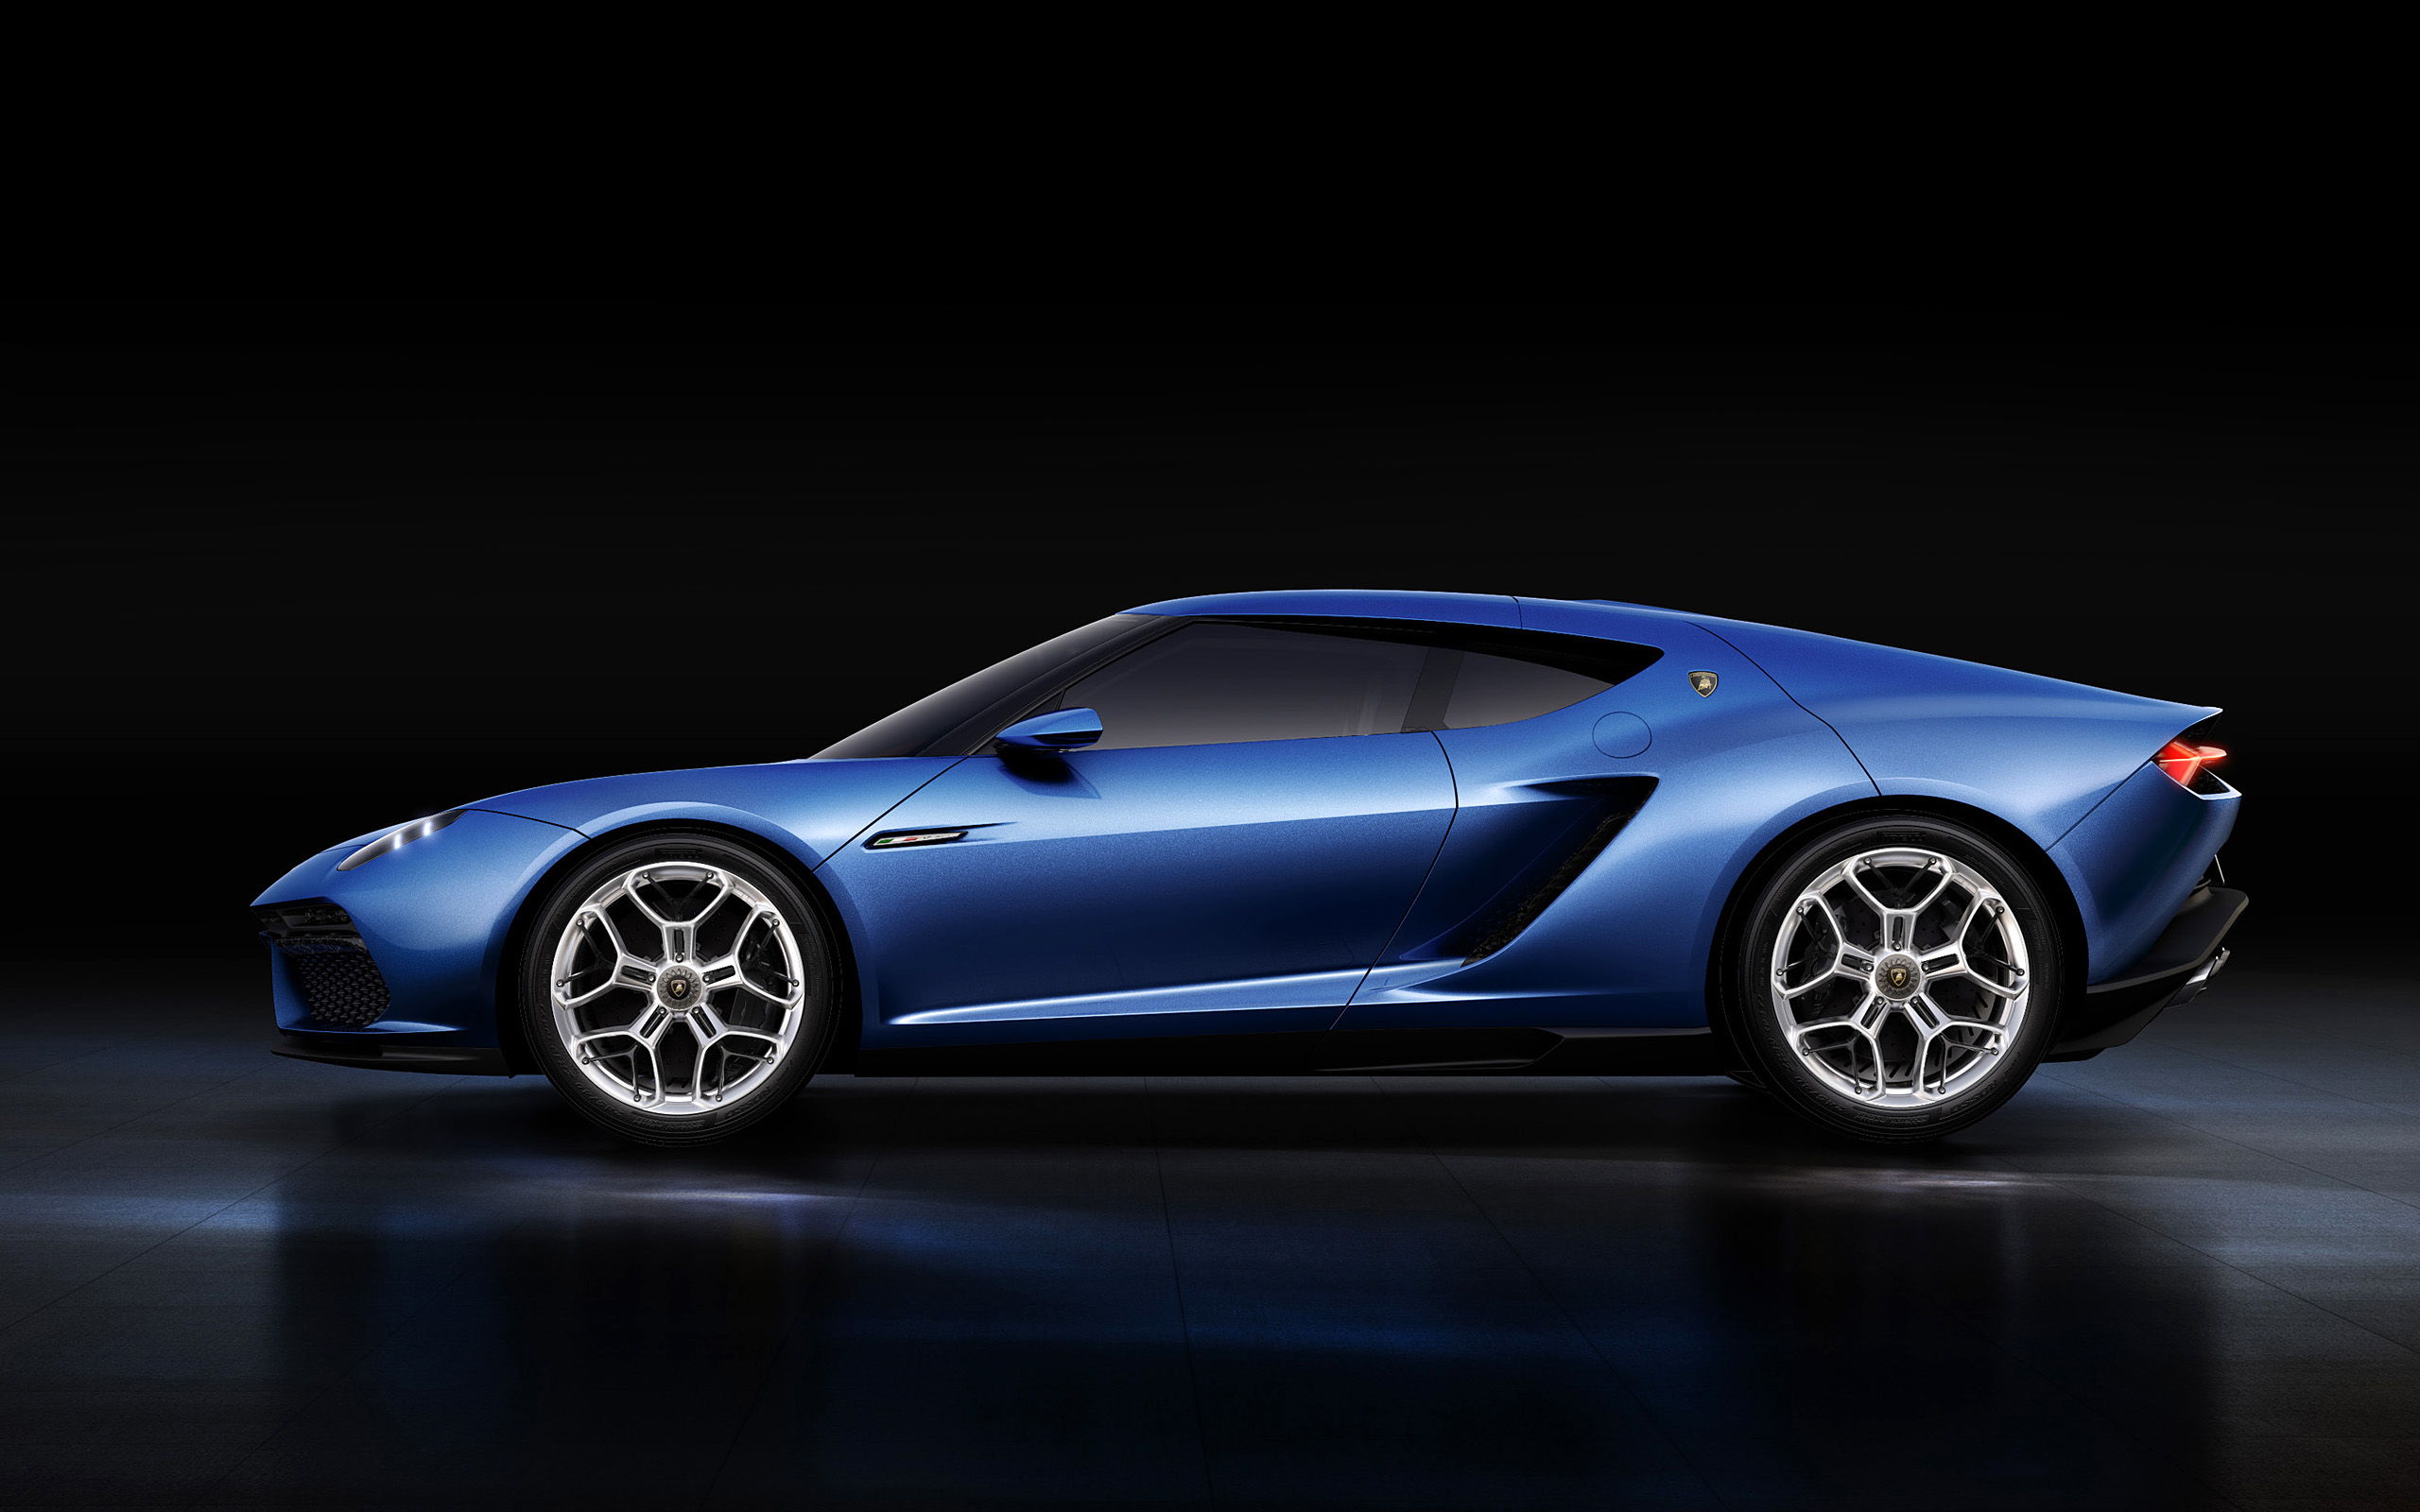  2014 Lamborghini Asterion LPI910-4 Concept Wallpaper.